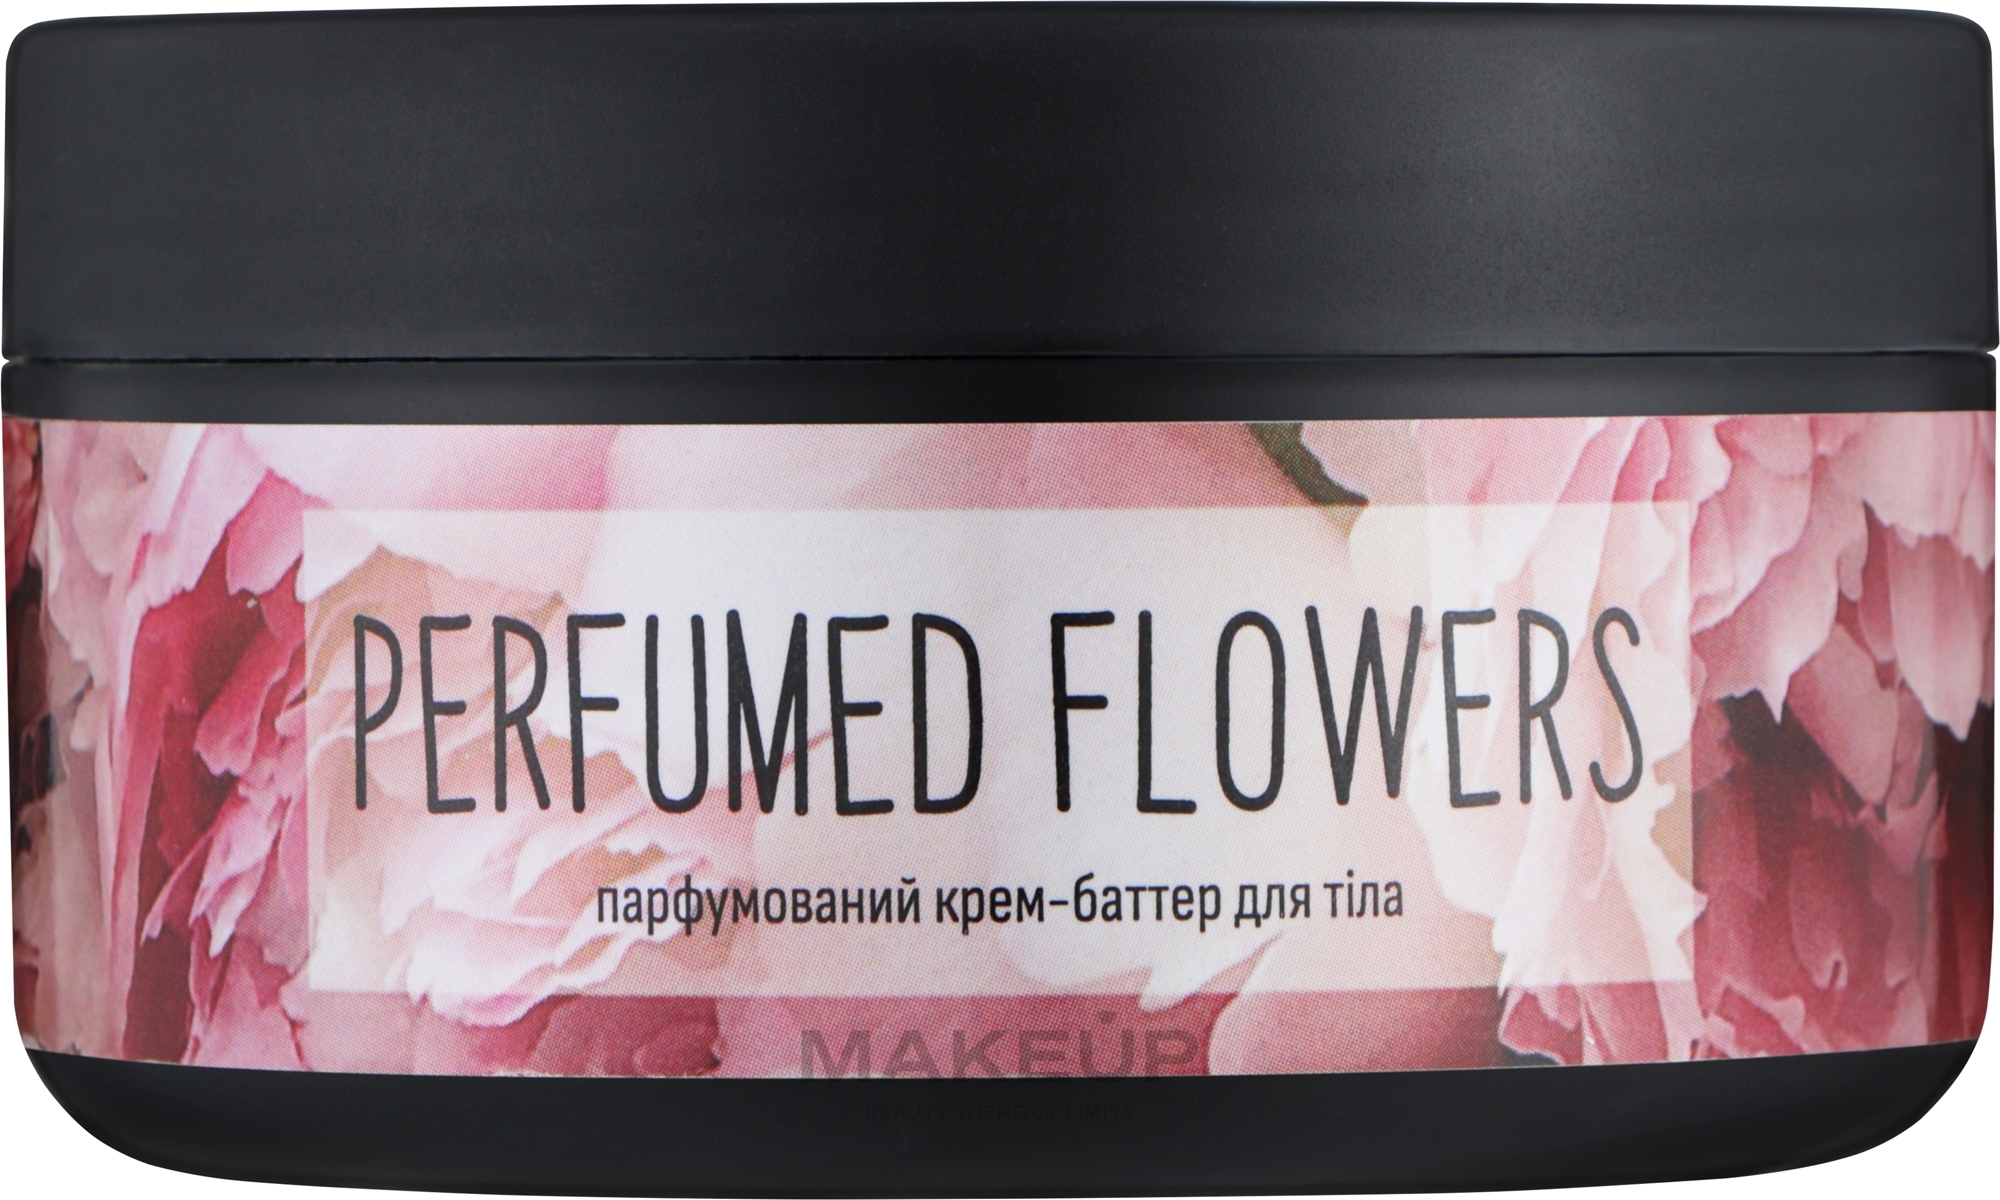 Крем-баттер для тела парфюмированный - Top Beauty Perfumed Flowers — фото 250ml